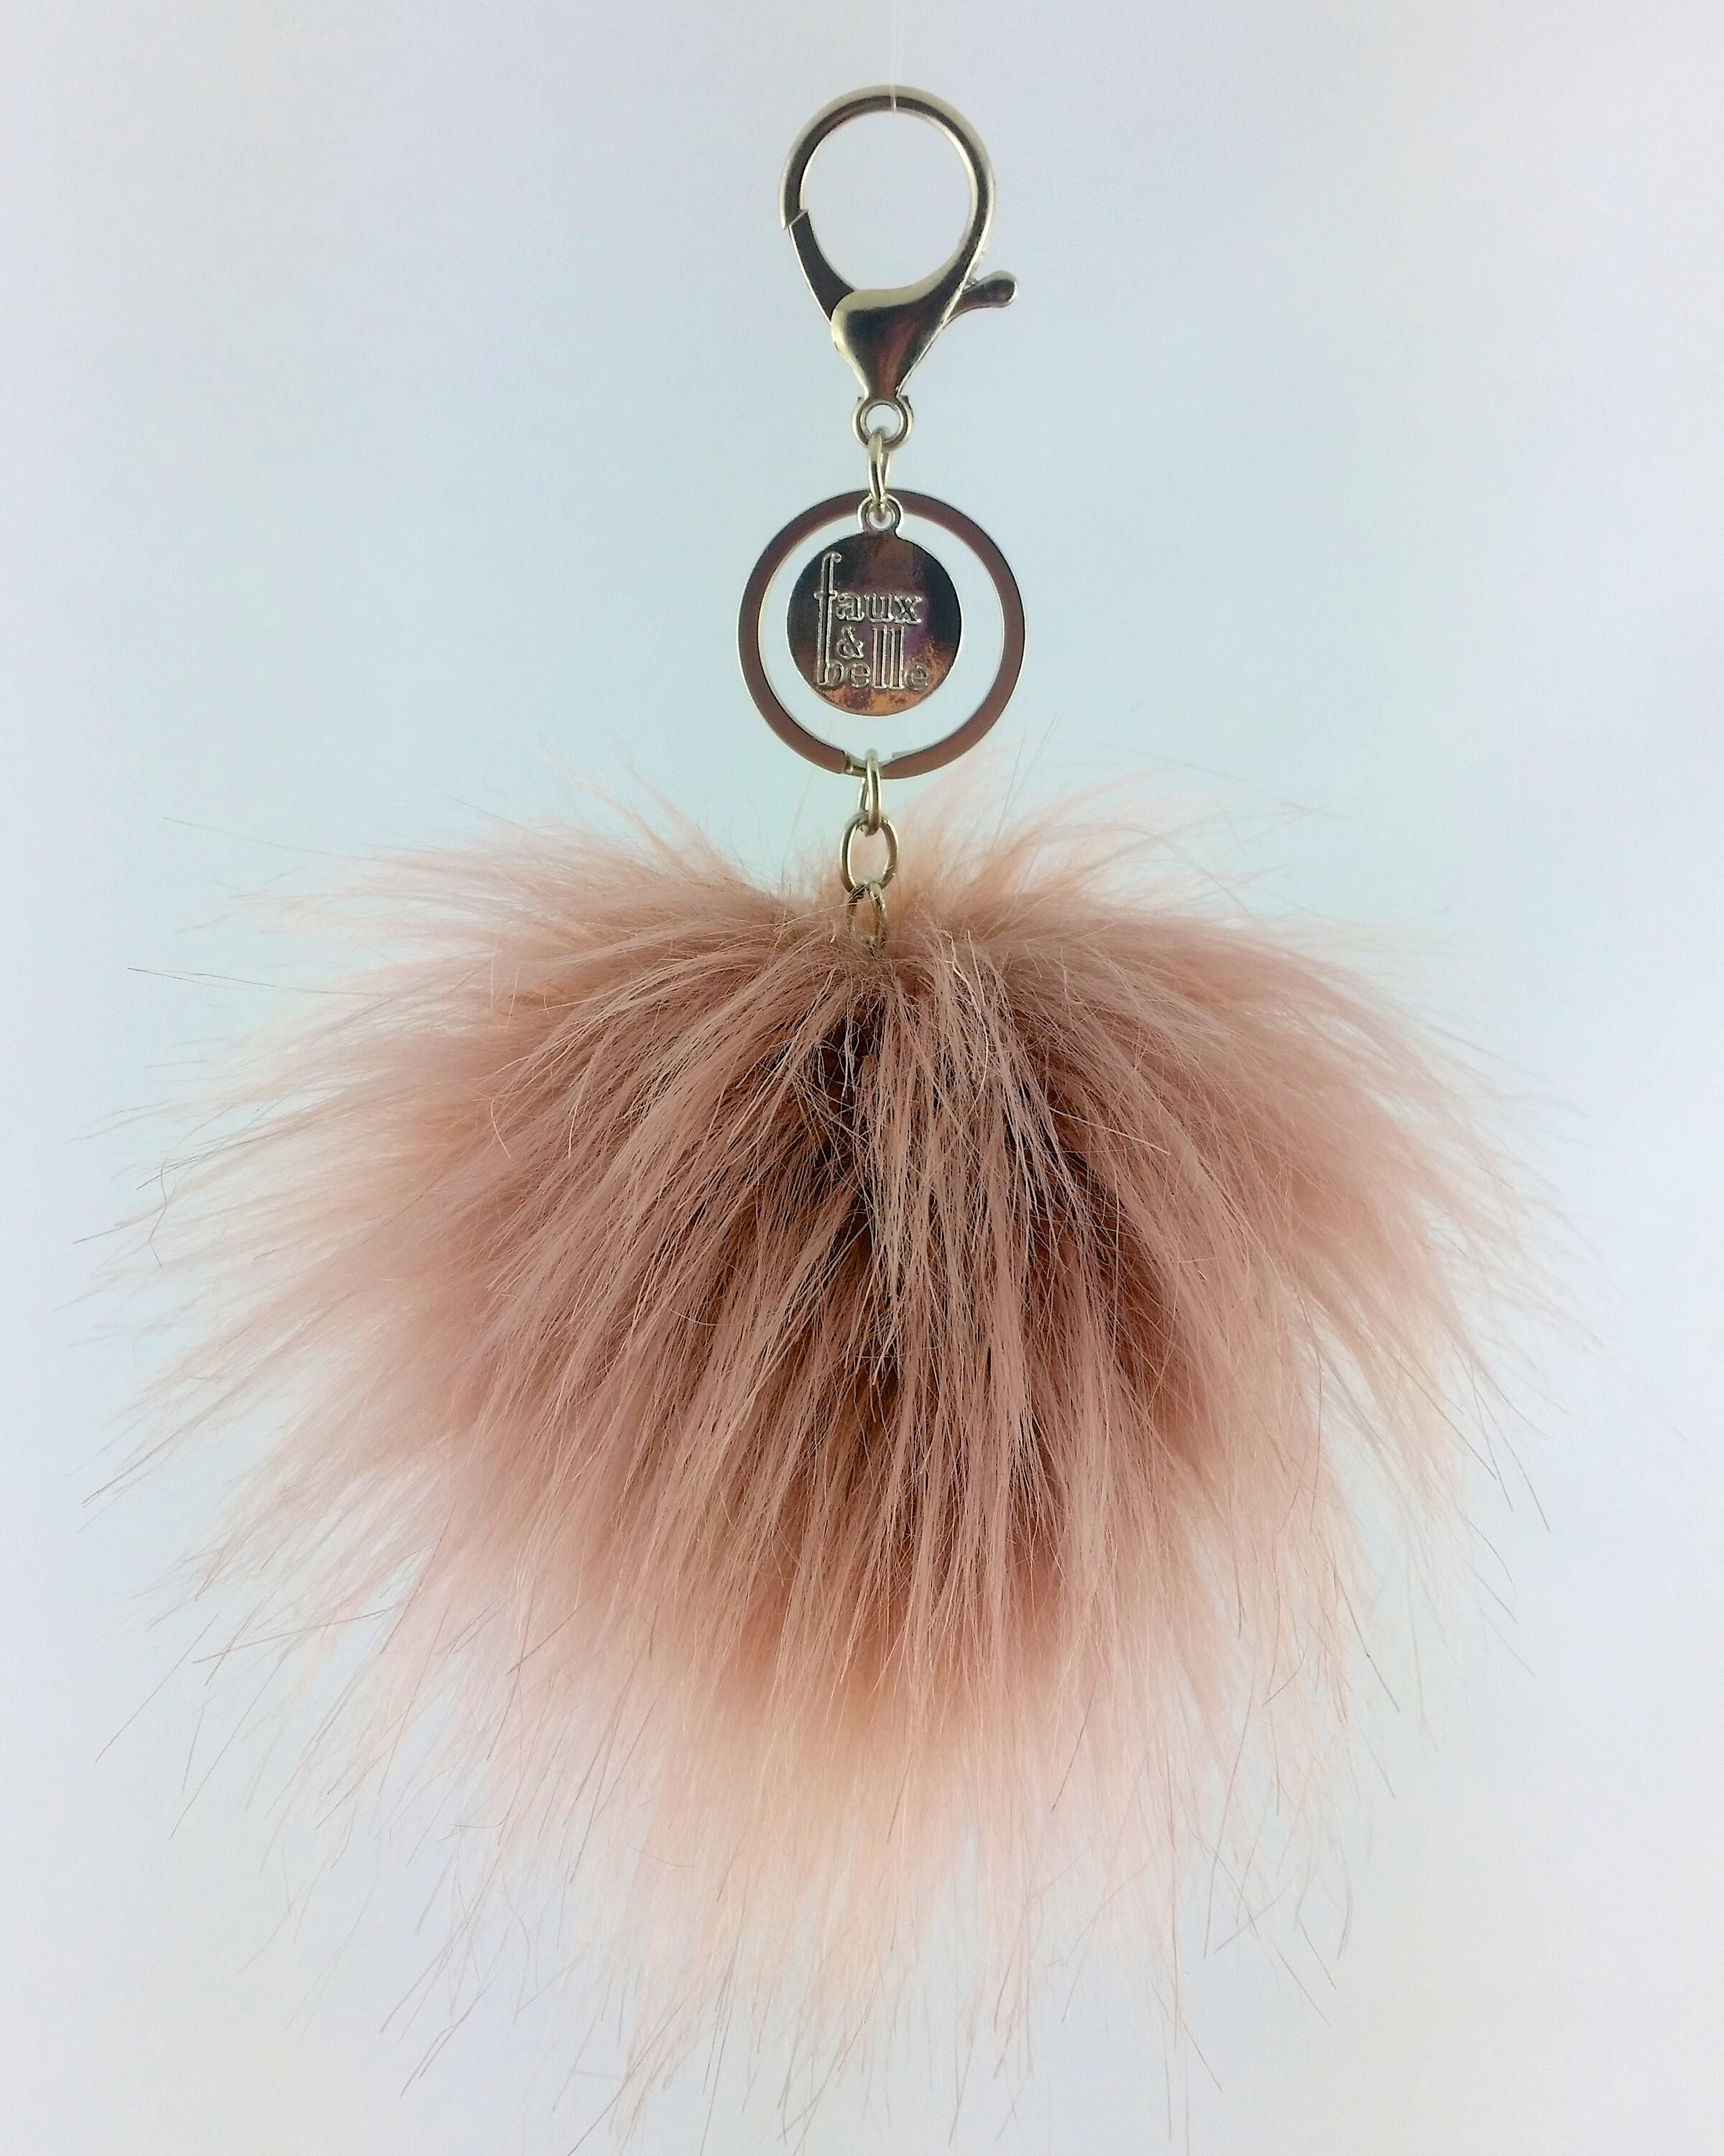 Furry Pompom Unicorn Key Chain Soft Pink Faux Fur Ball Key Ring + Clip